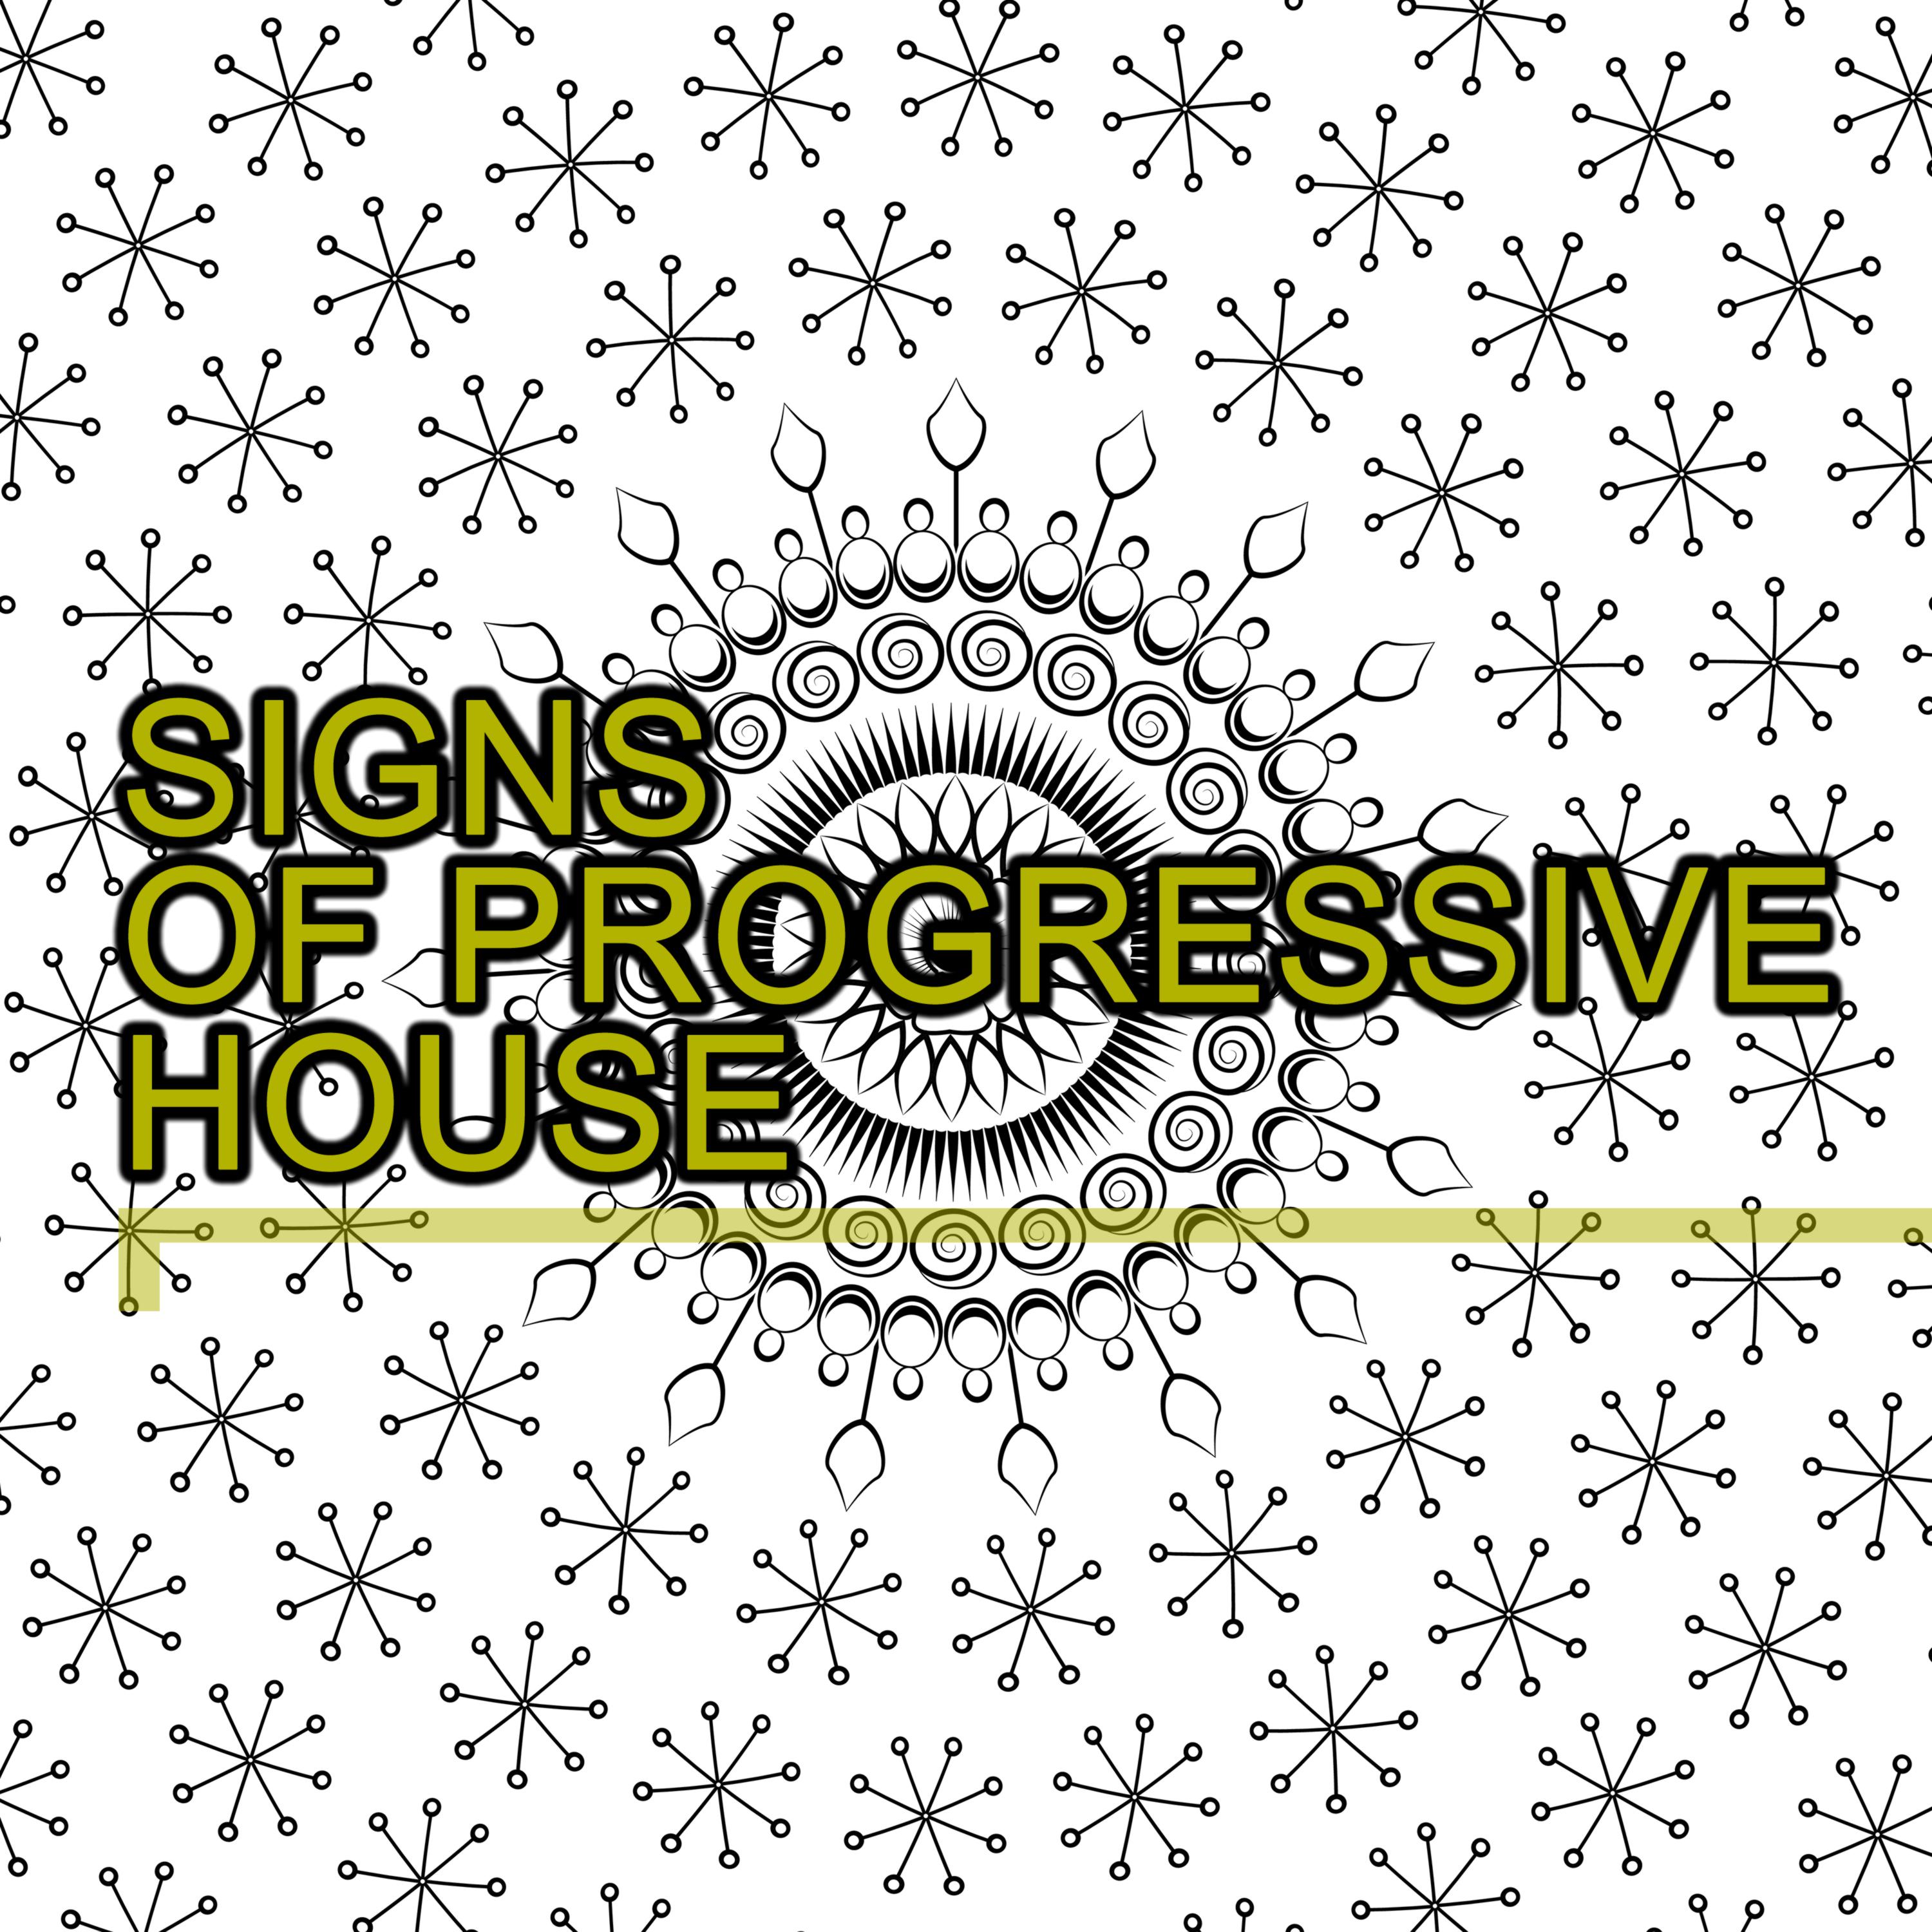 Signs of House Progressive